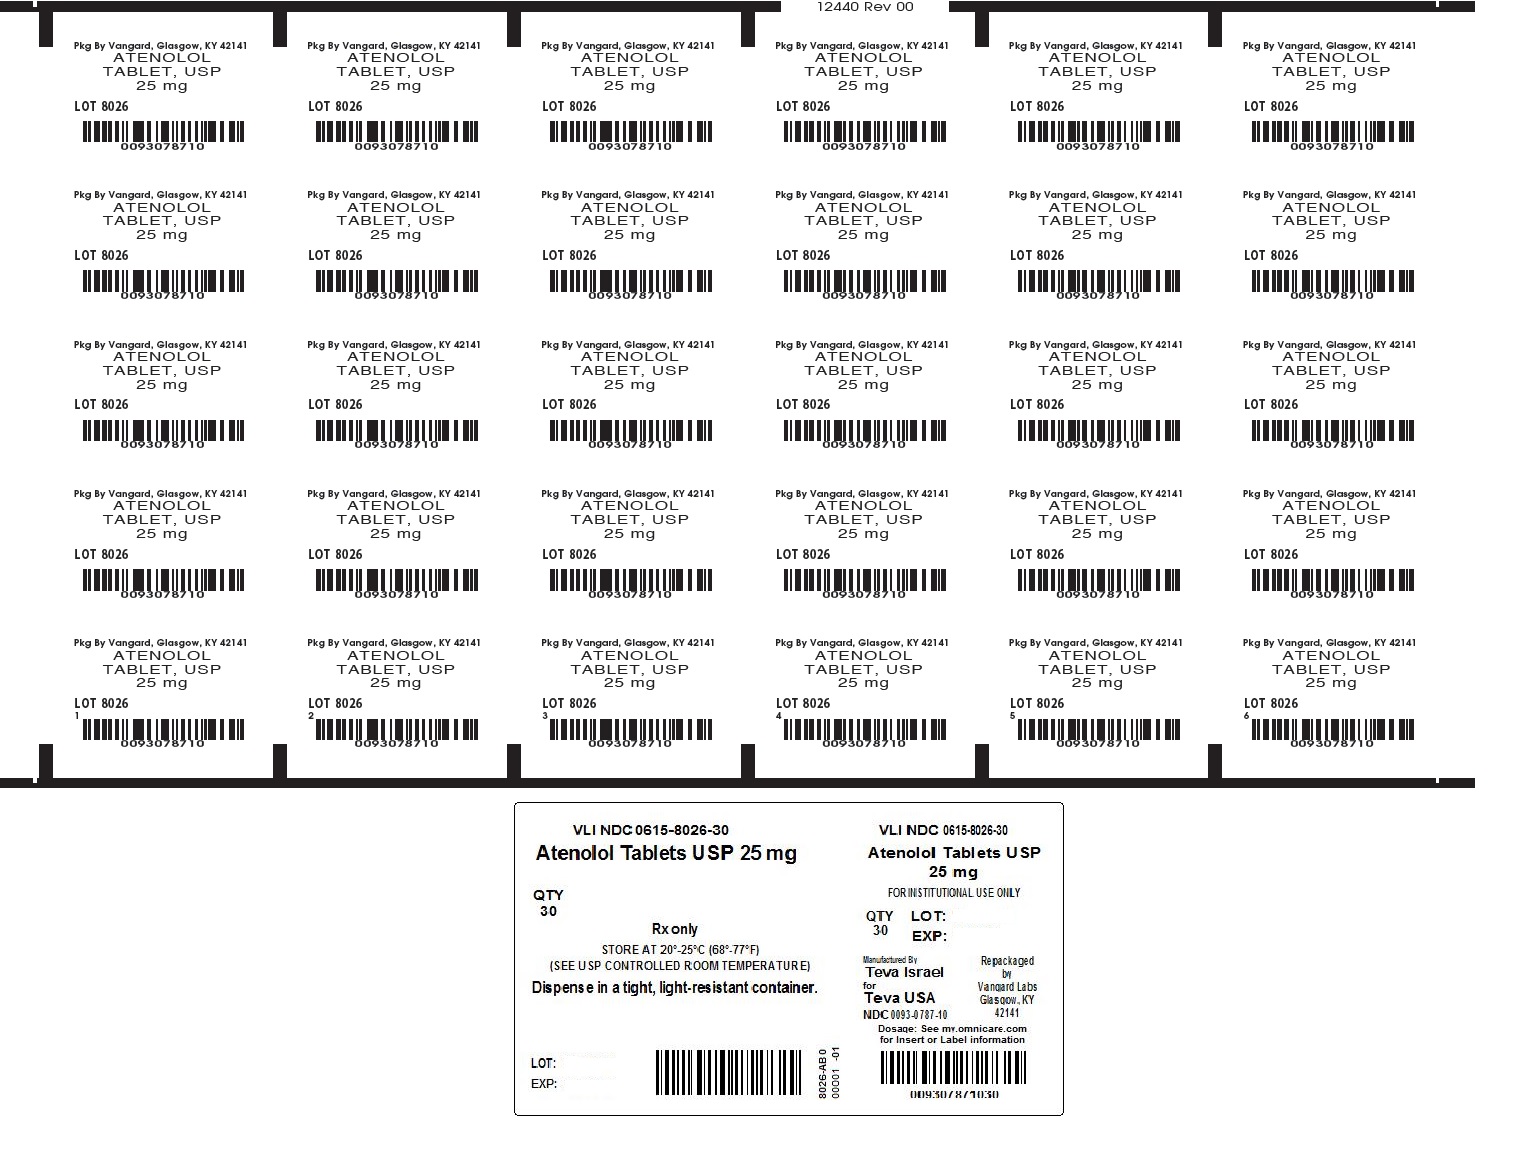 Atenolol tablets 25mg unit dose label